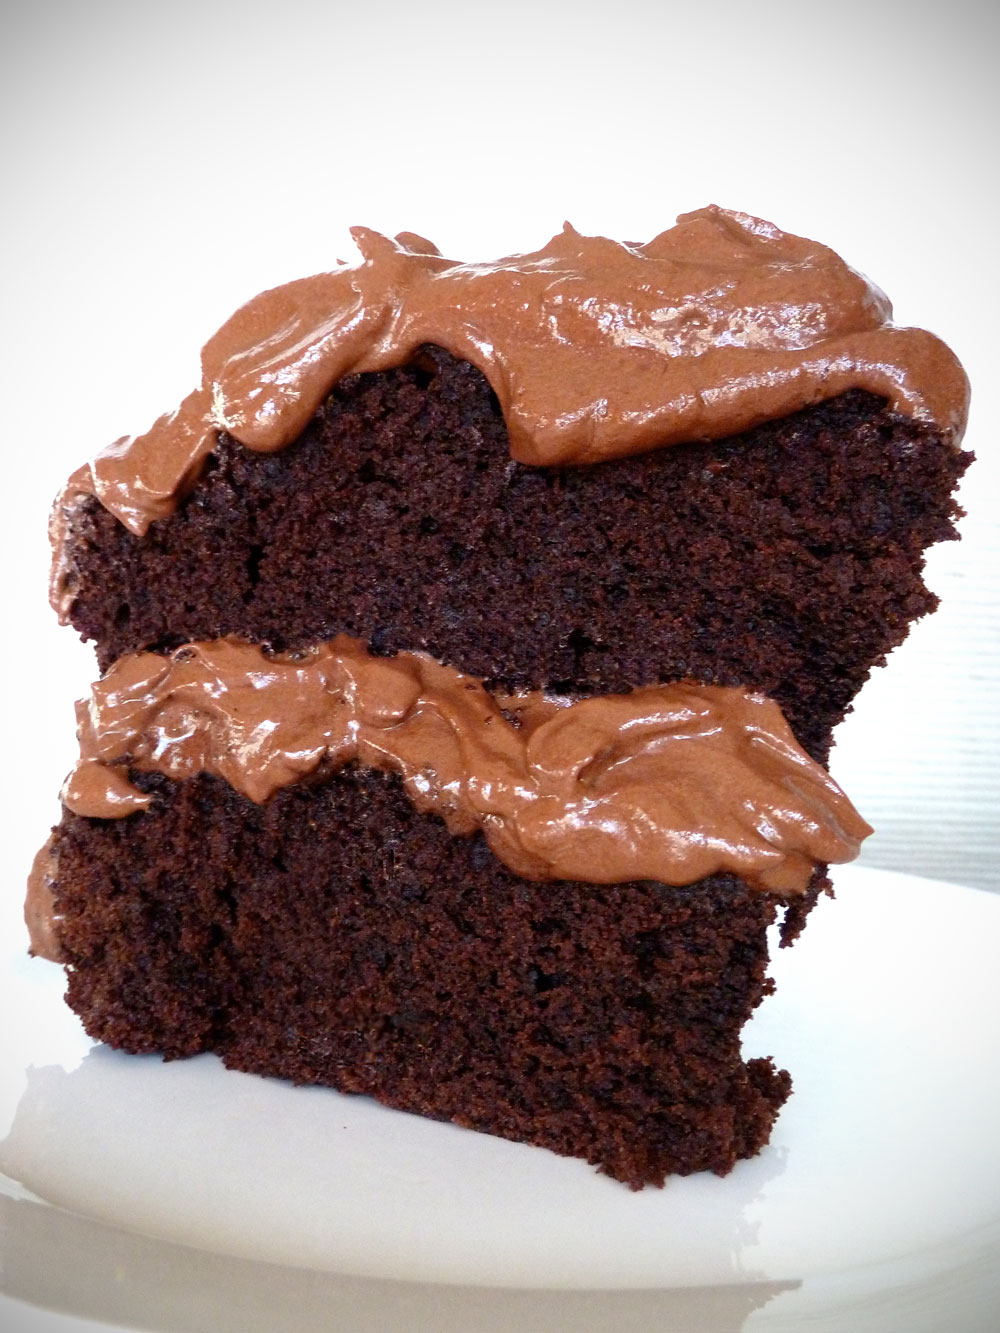 Simple Chocolate Cake Recipe from Scratch